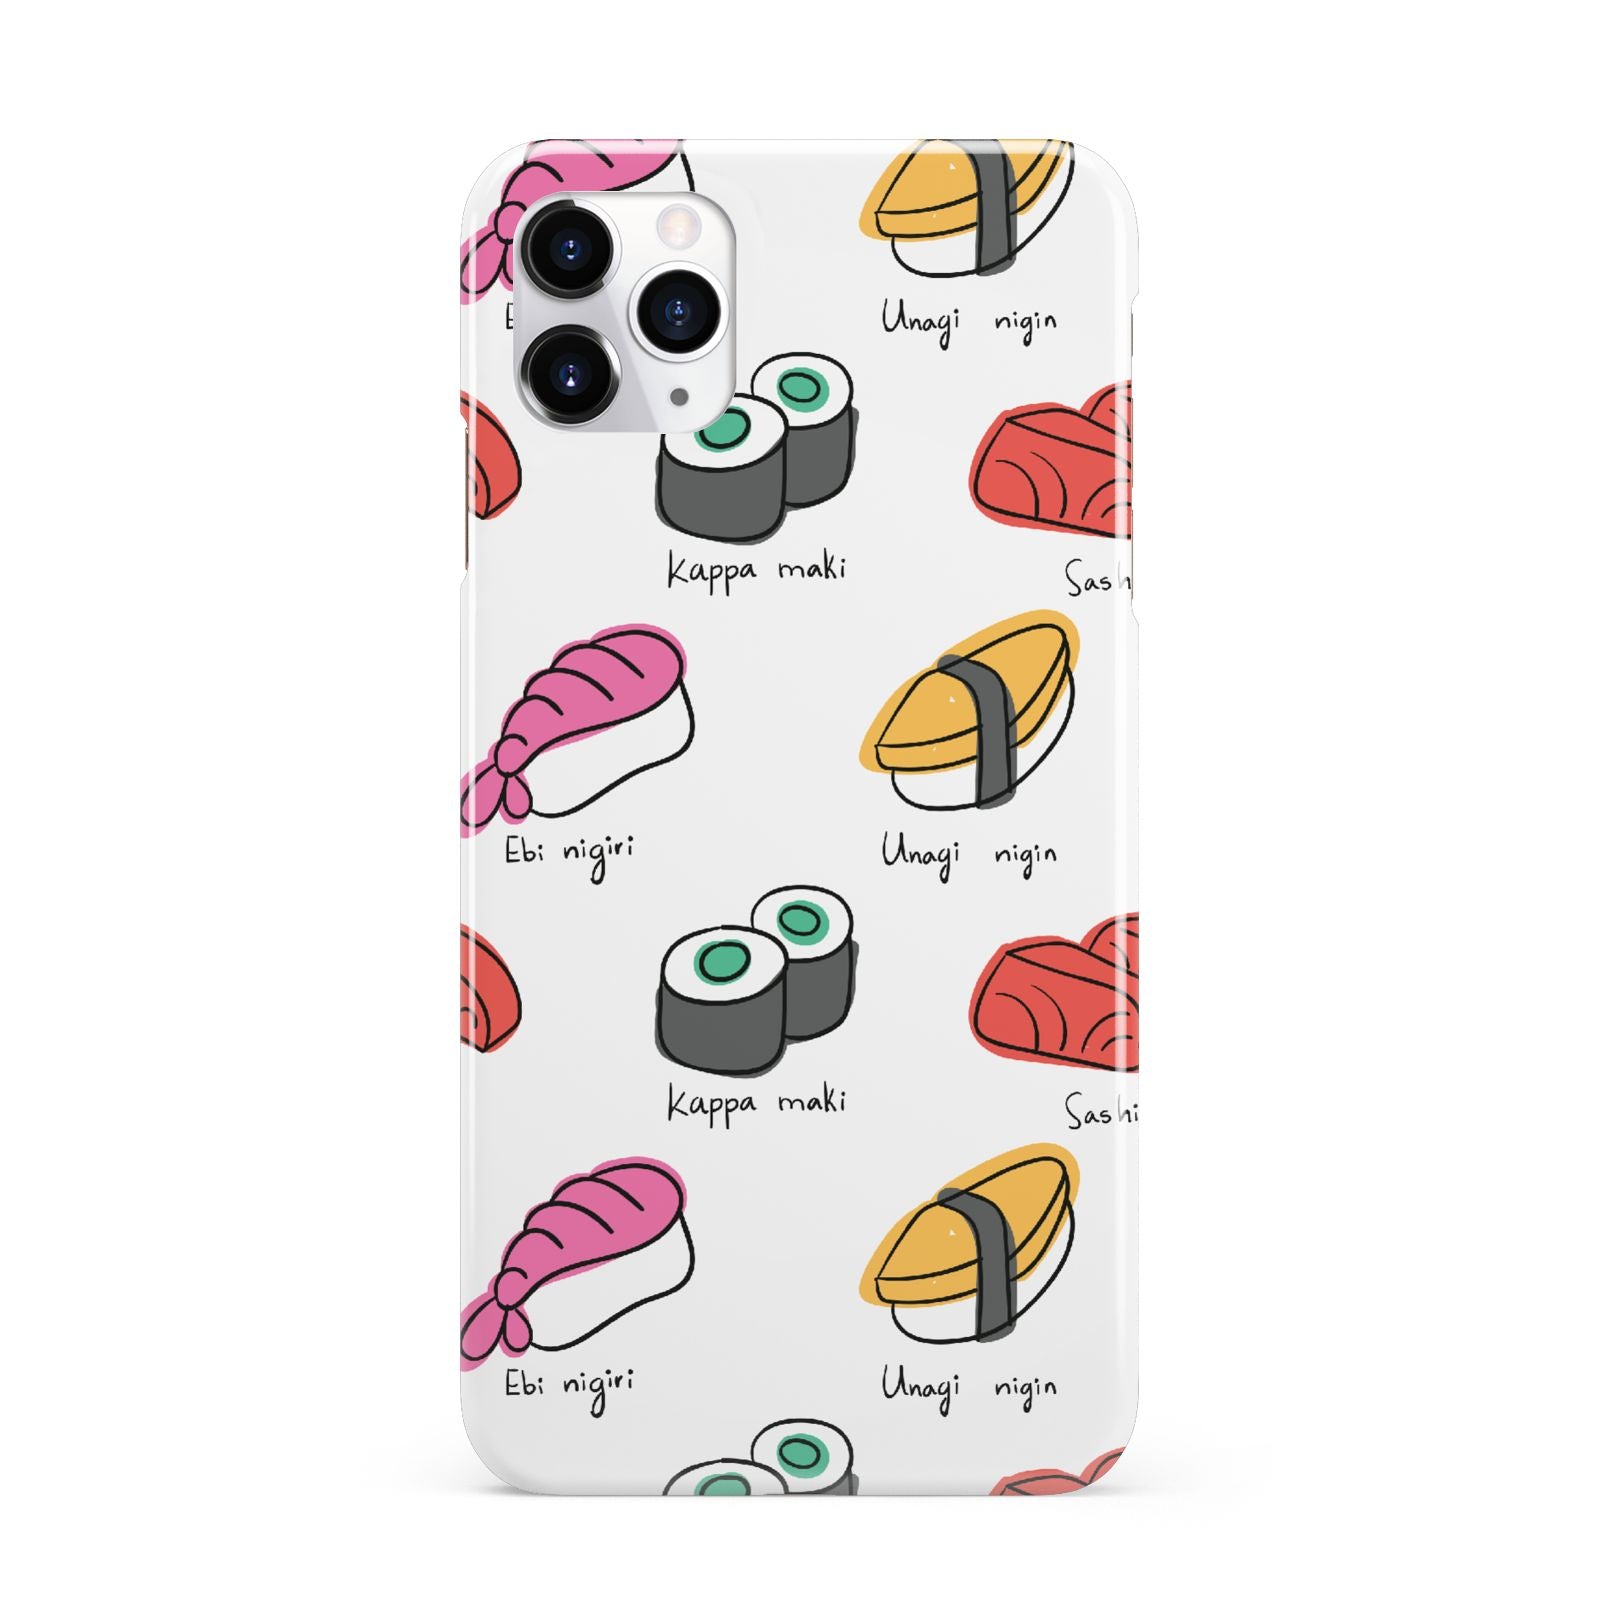 Sashimi Kappa Maki Sushi iPhone 11 Pro Max 3D Snap Case